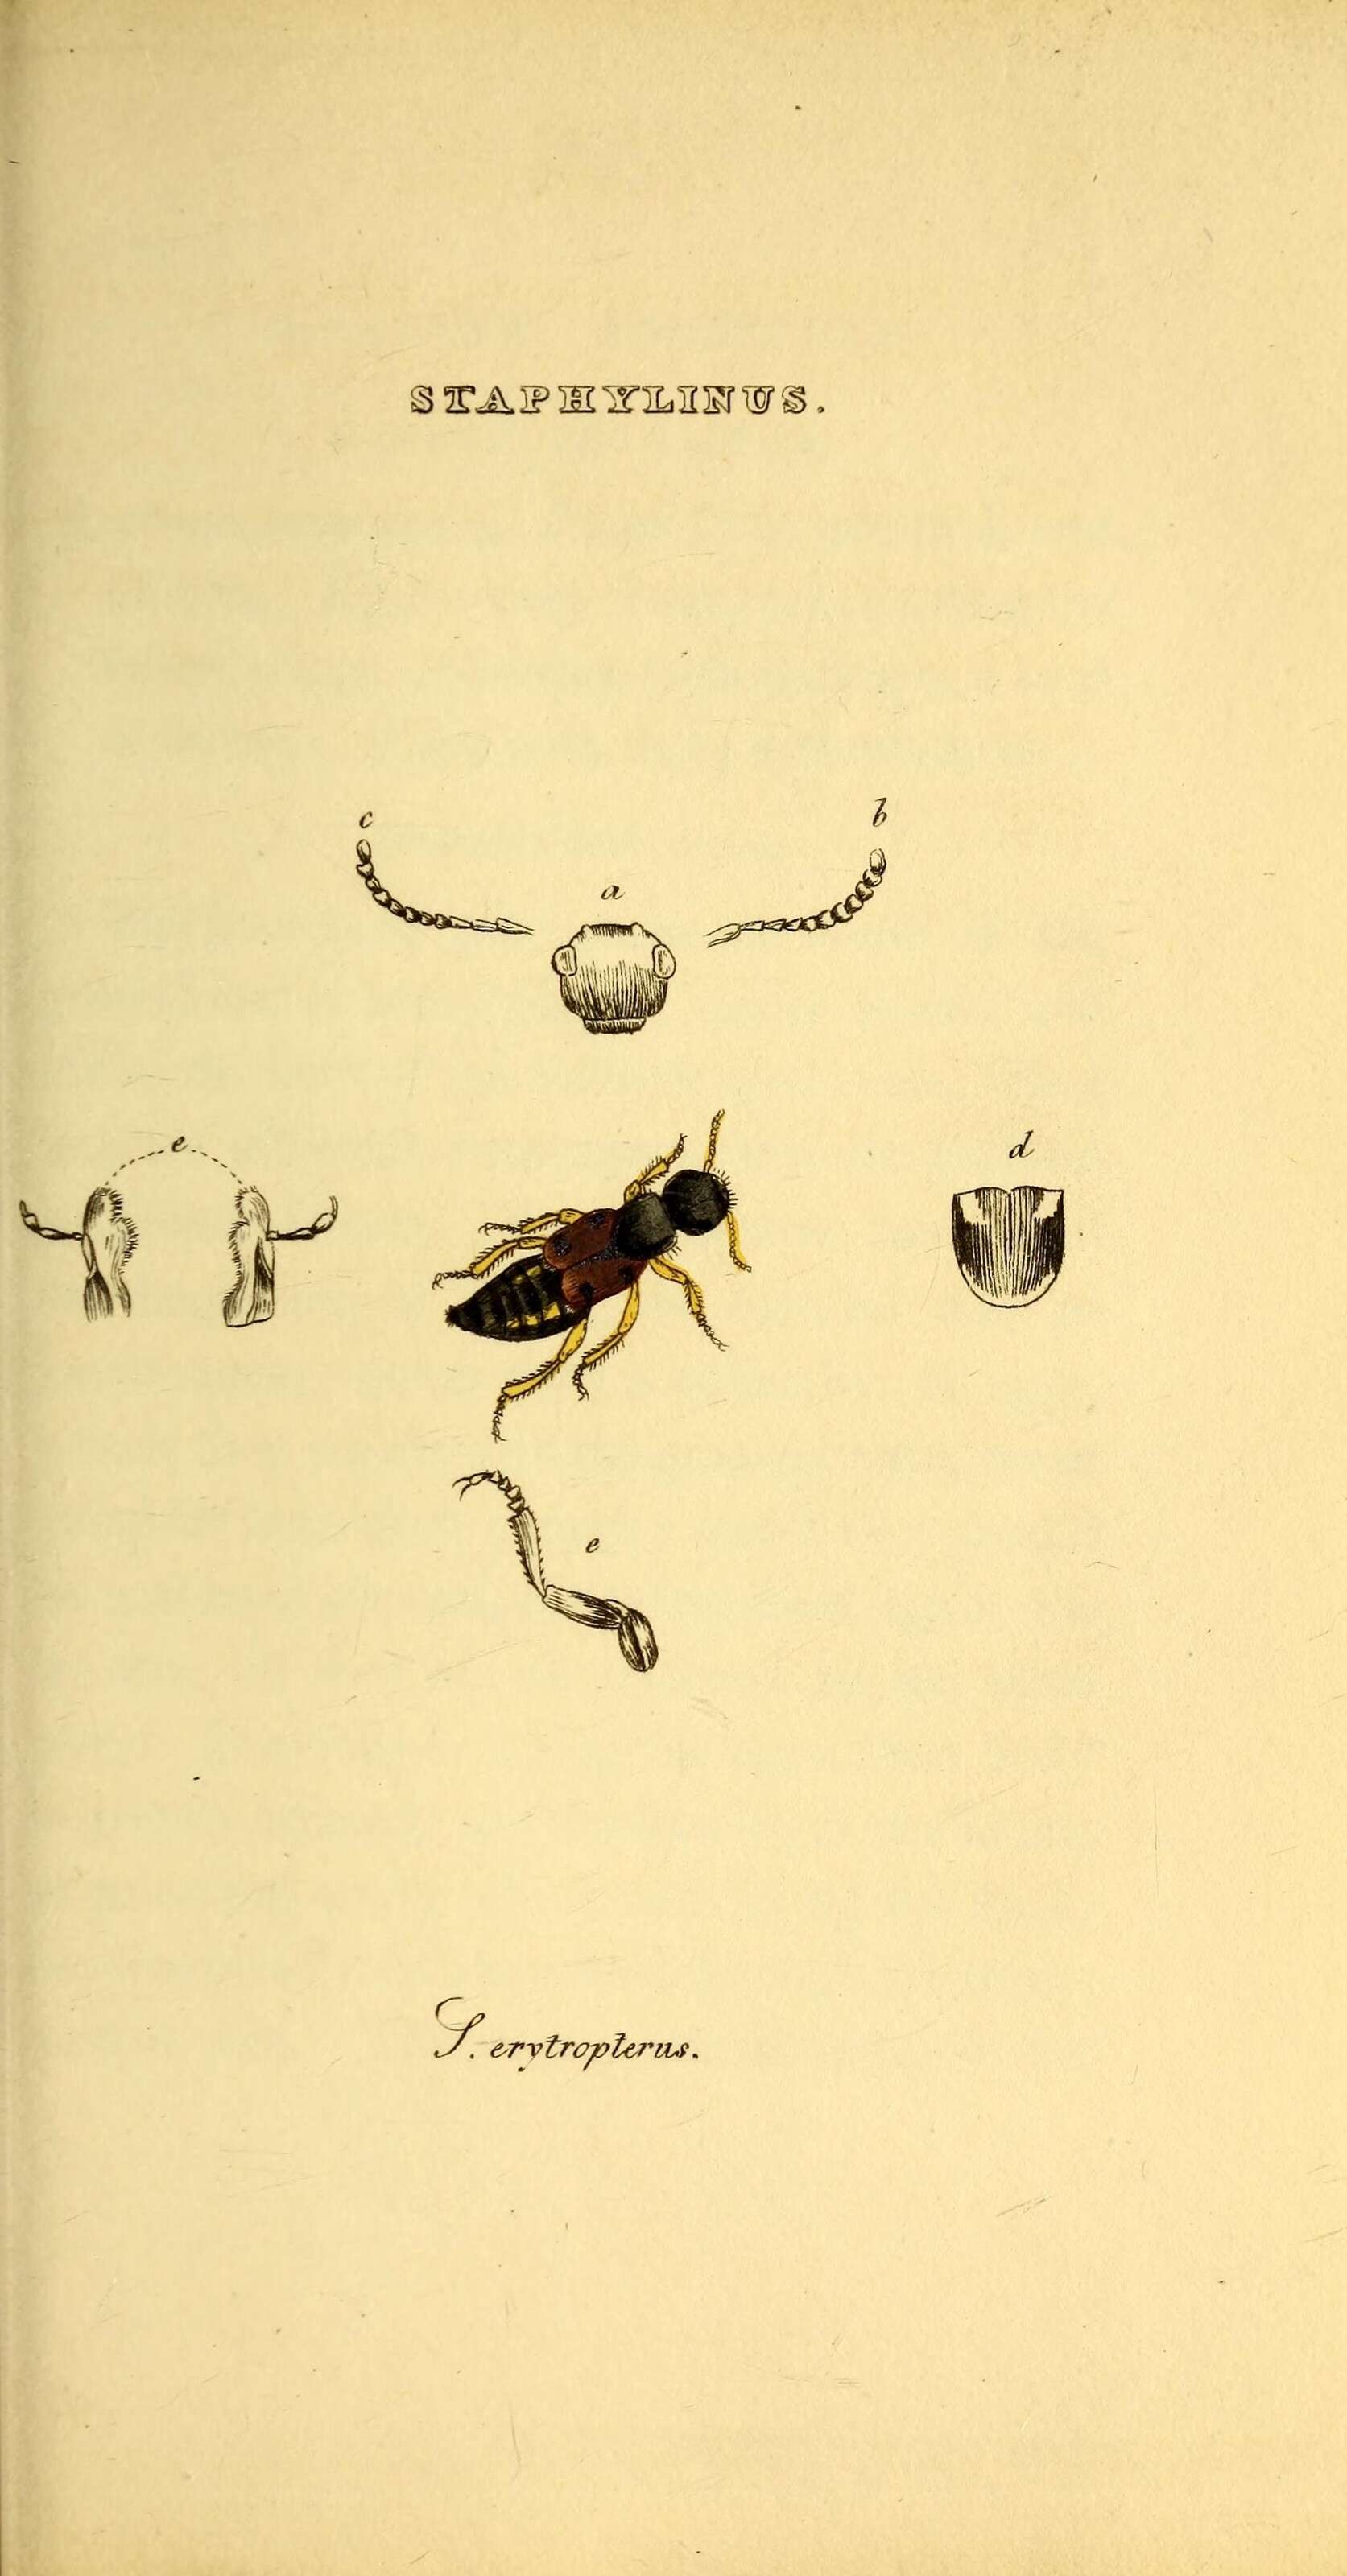 Image of rove beetles